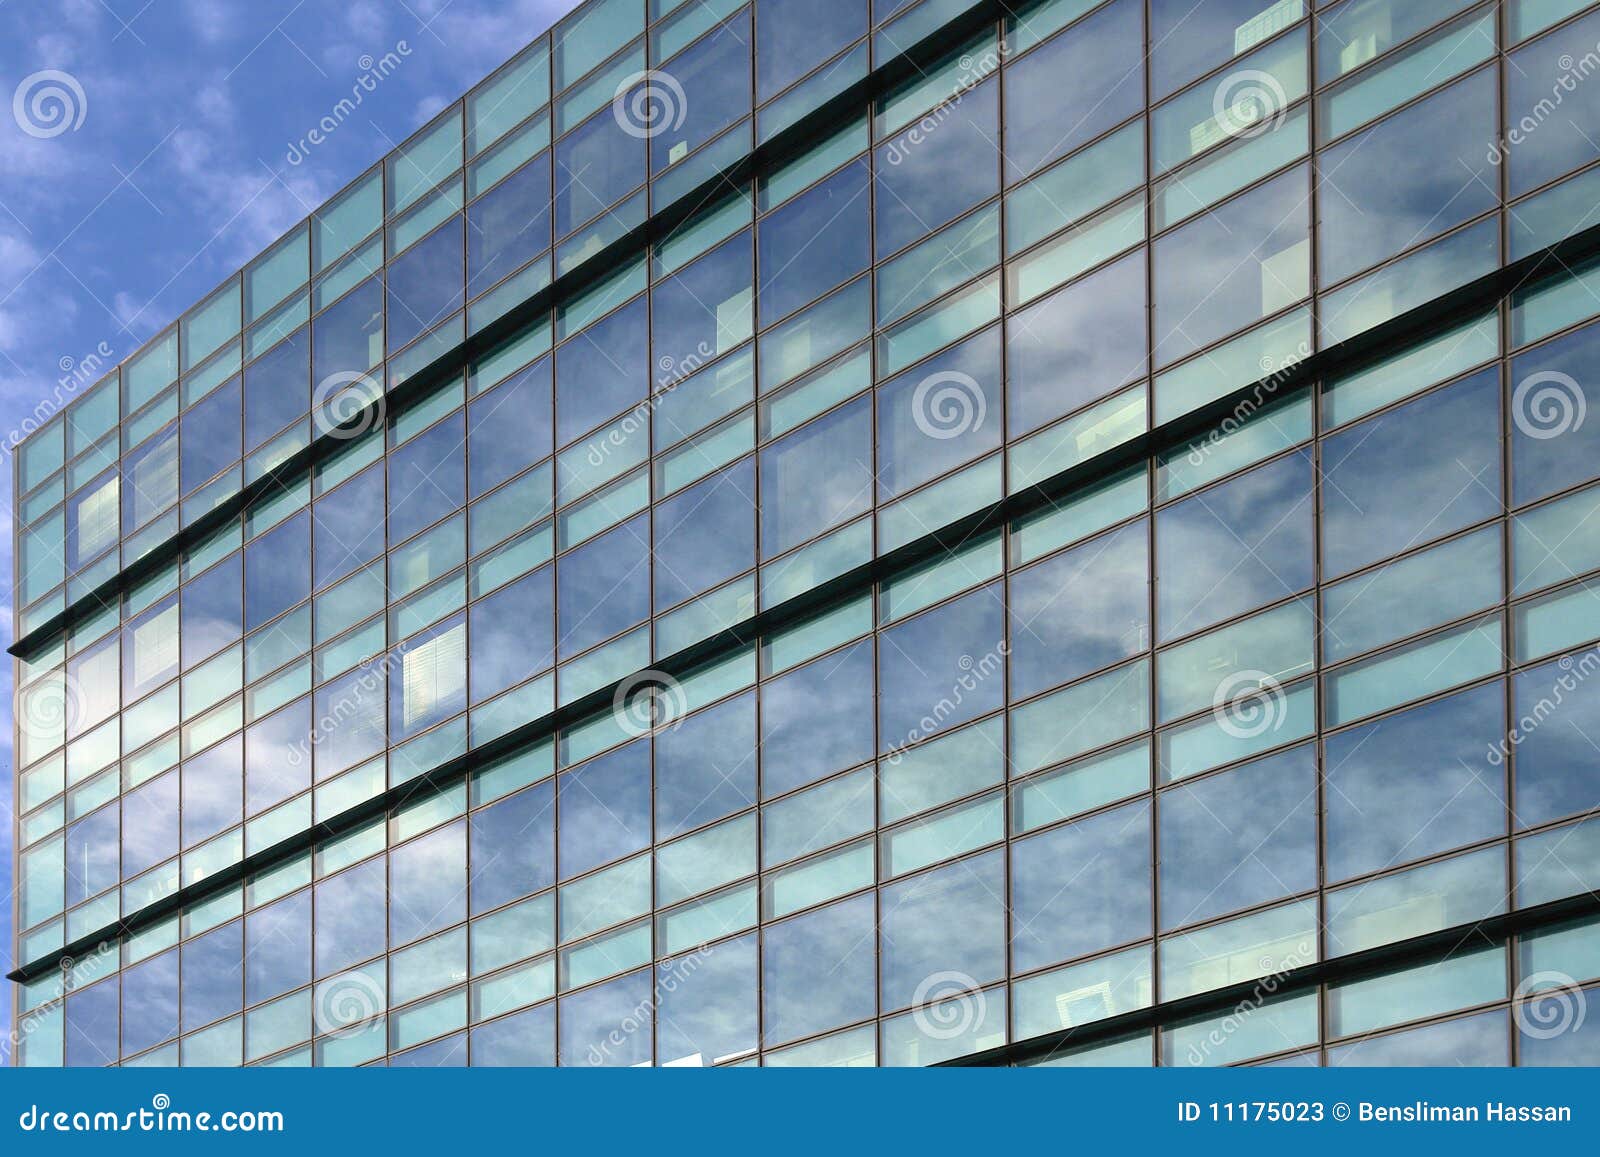 Glass Reflection Stock Photos - Image: 11175023